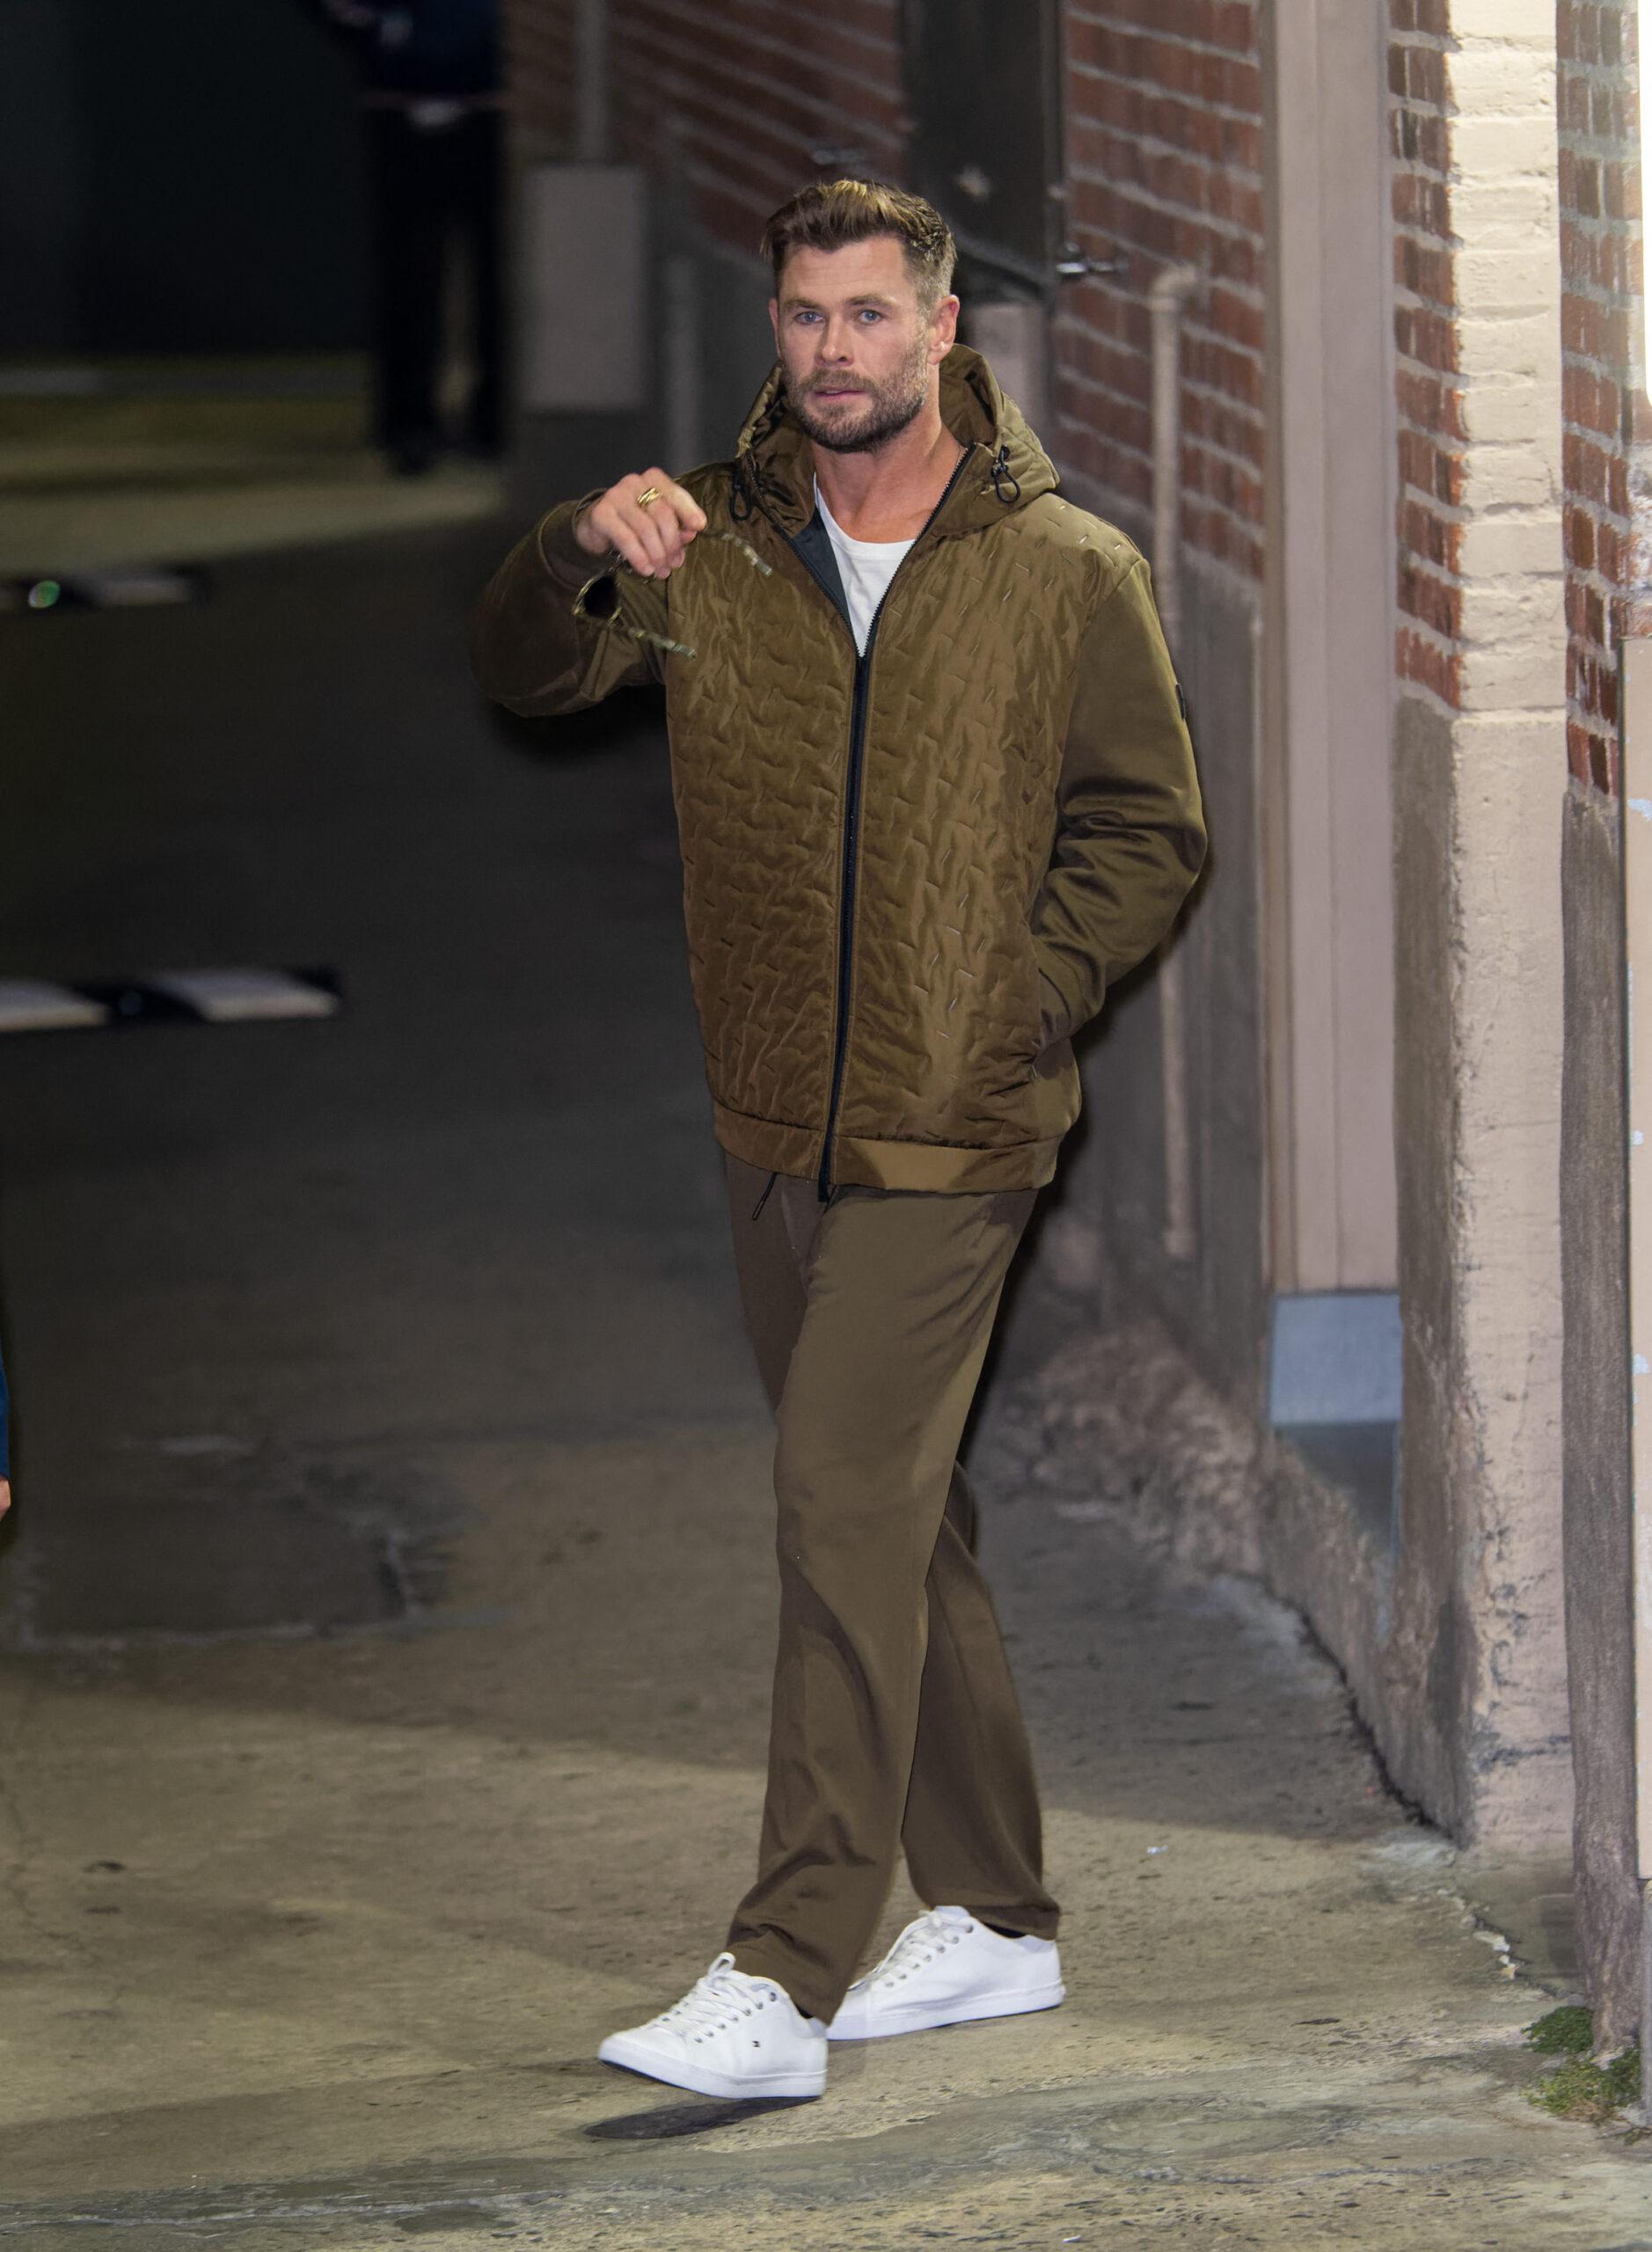 Chris Hemsworth at Kimmel